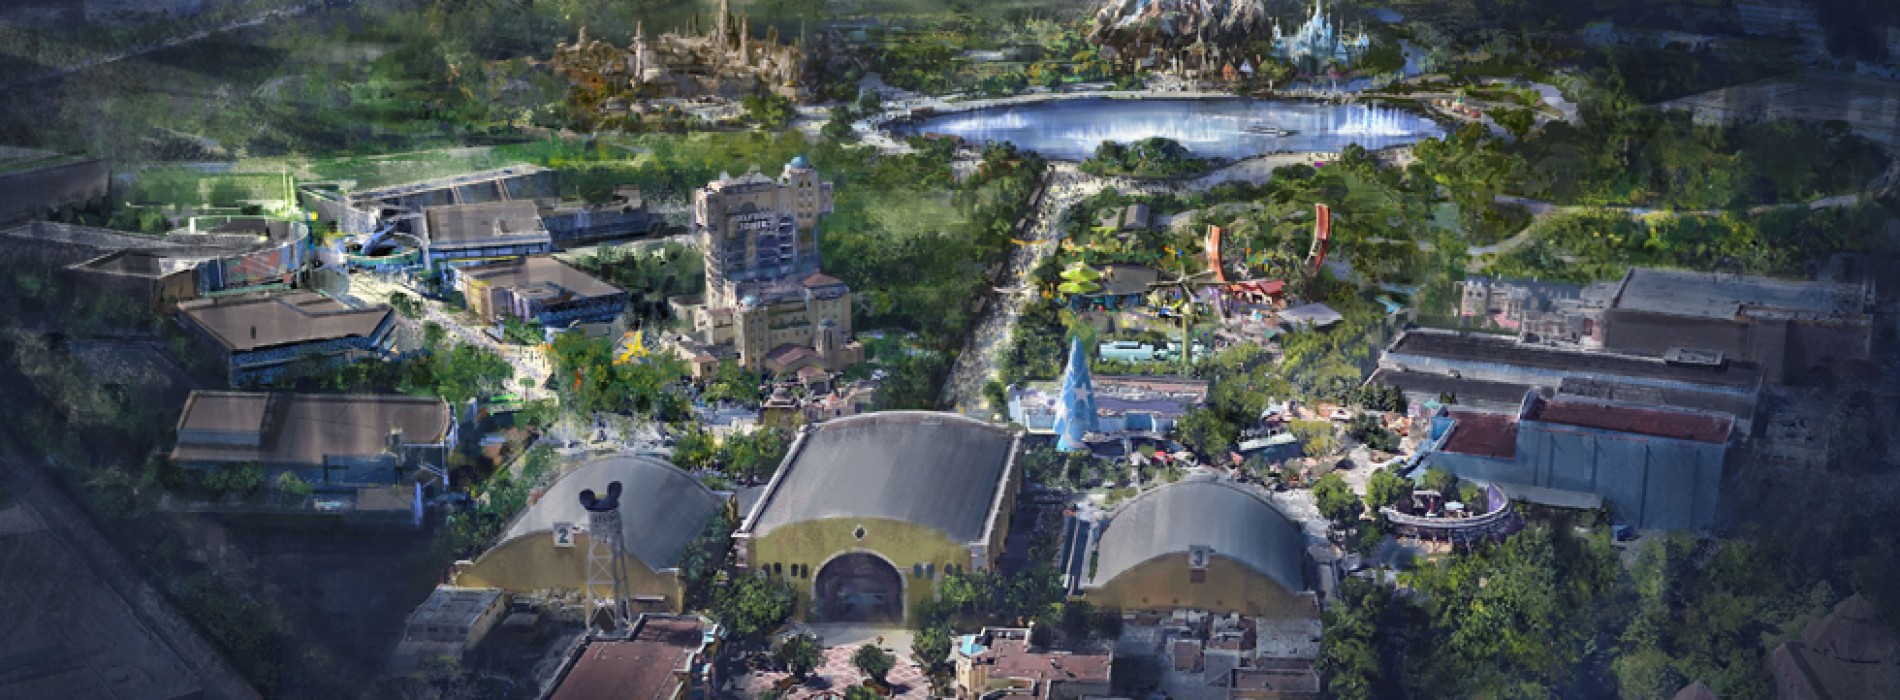 Disney announces transformative multi-year expansion for Disneyland Paris